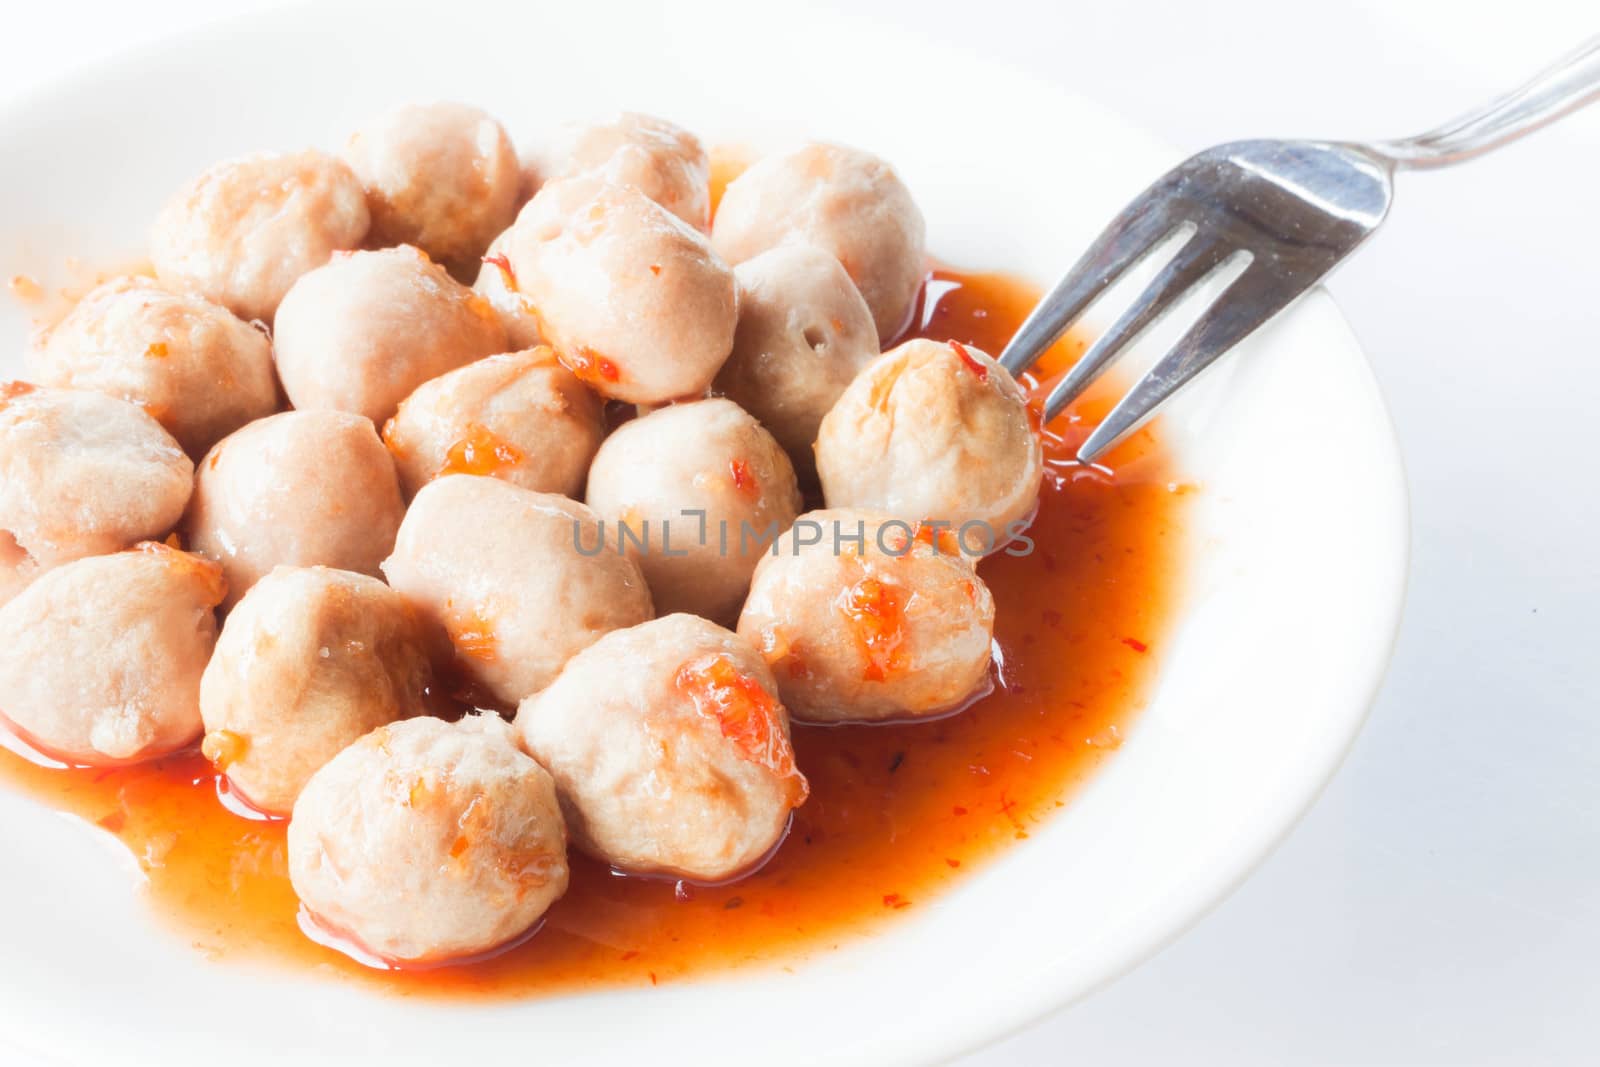 Mini pork balls in orange dish on clean table by punsayaporn